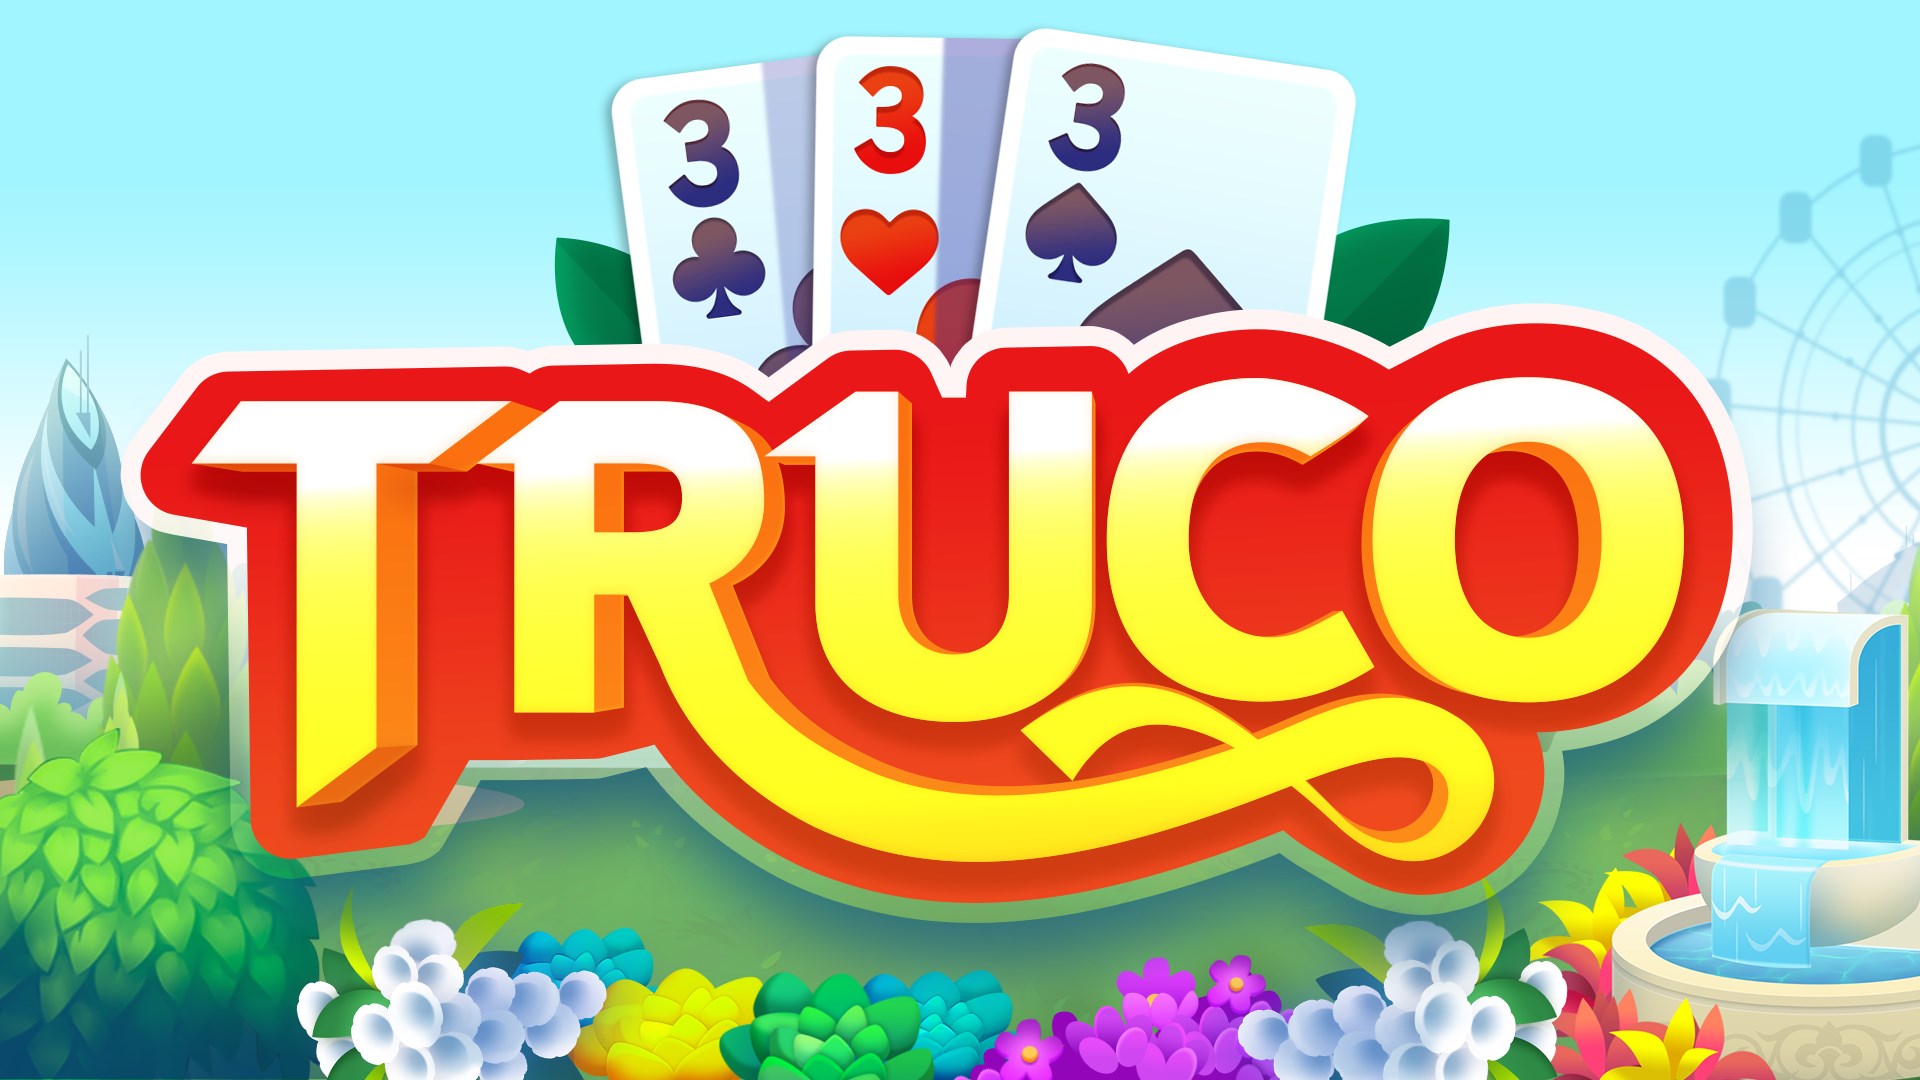 TRUCO GameVelvet - Card Game by Megajogos Entretenimento Ltda